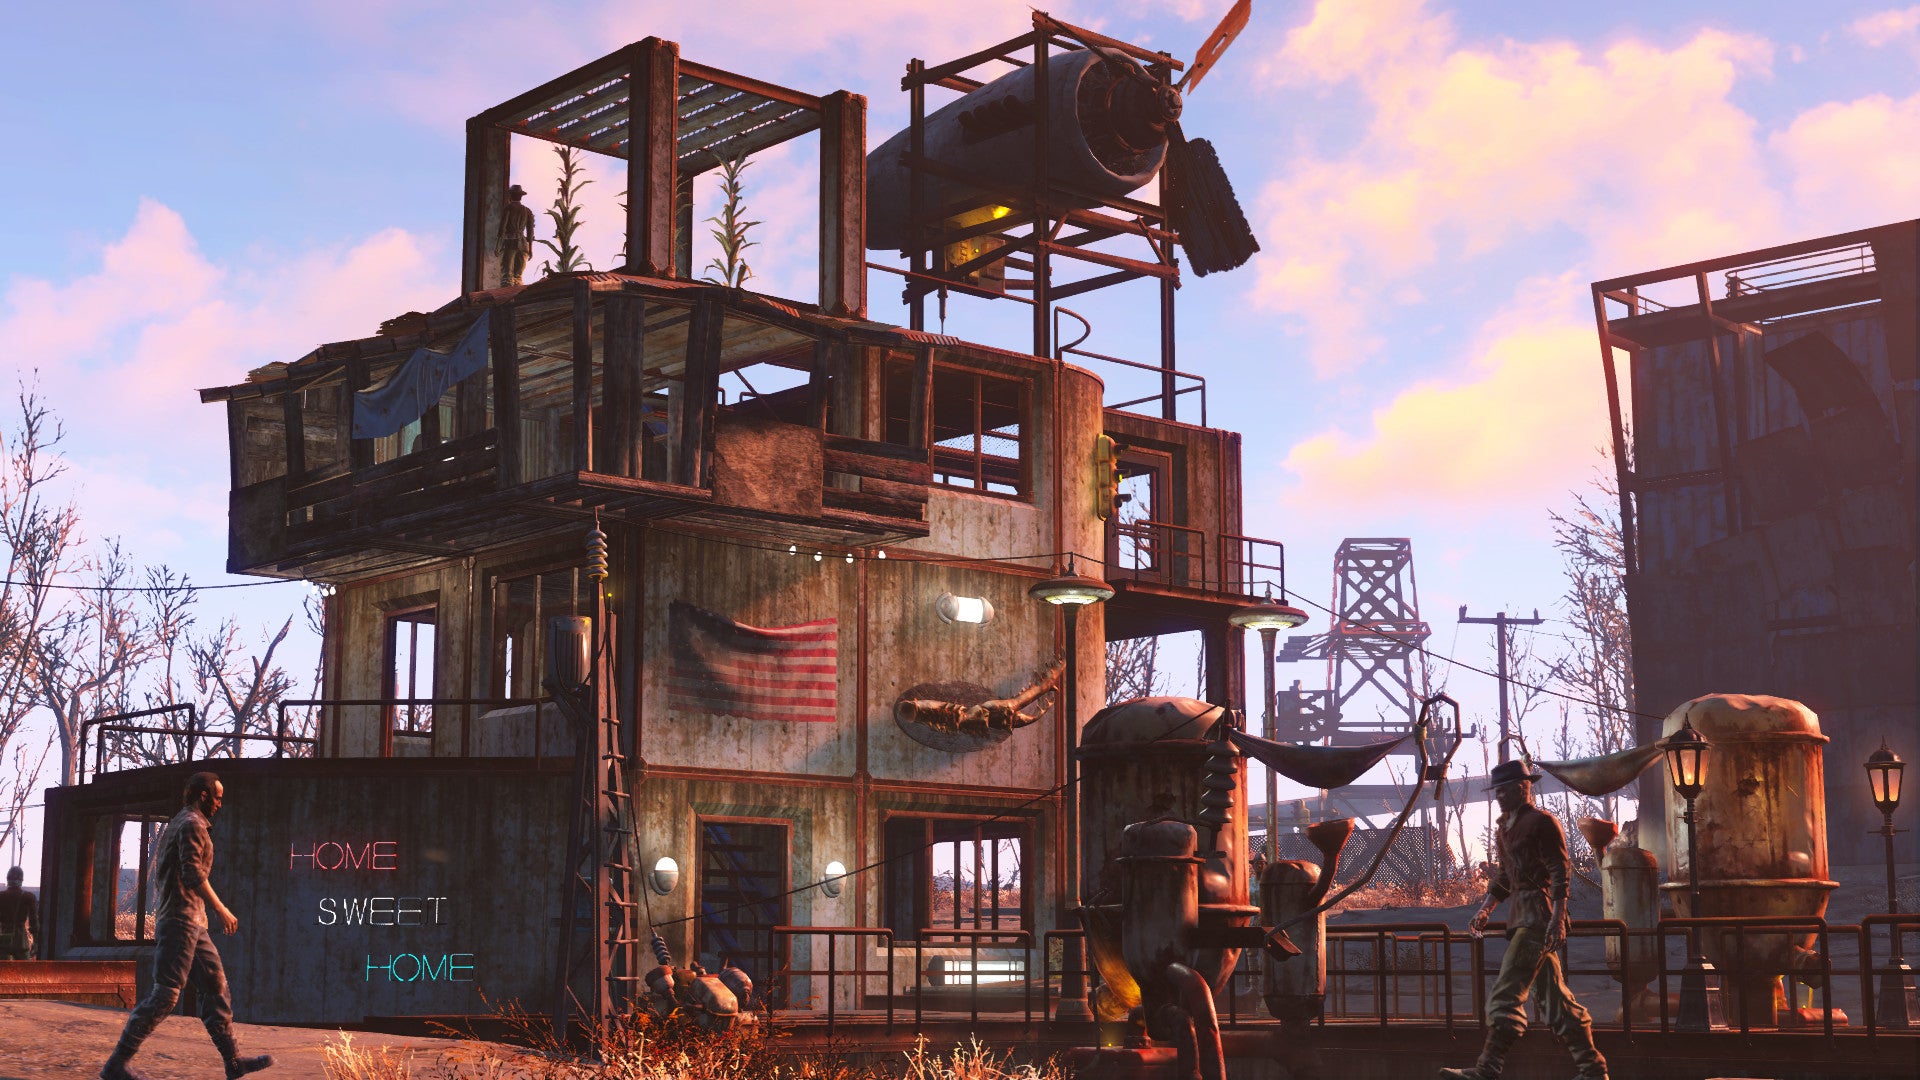 Fallout 4 - Wasteland Workshop DLC